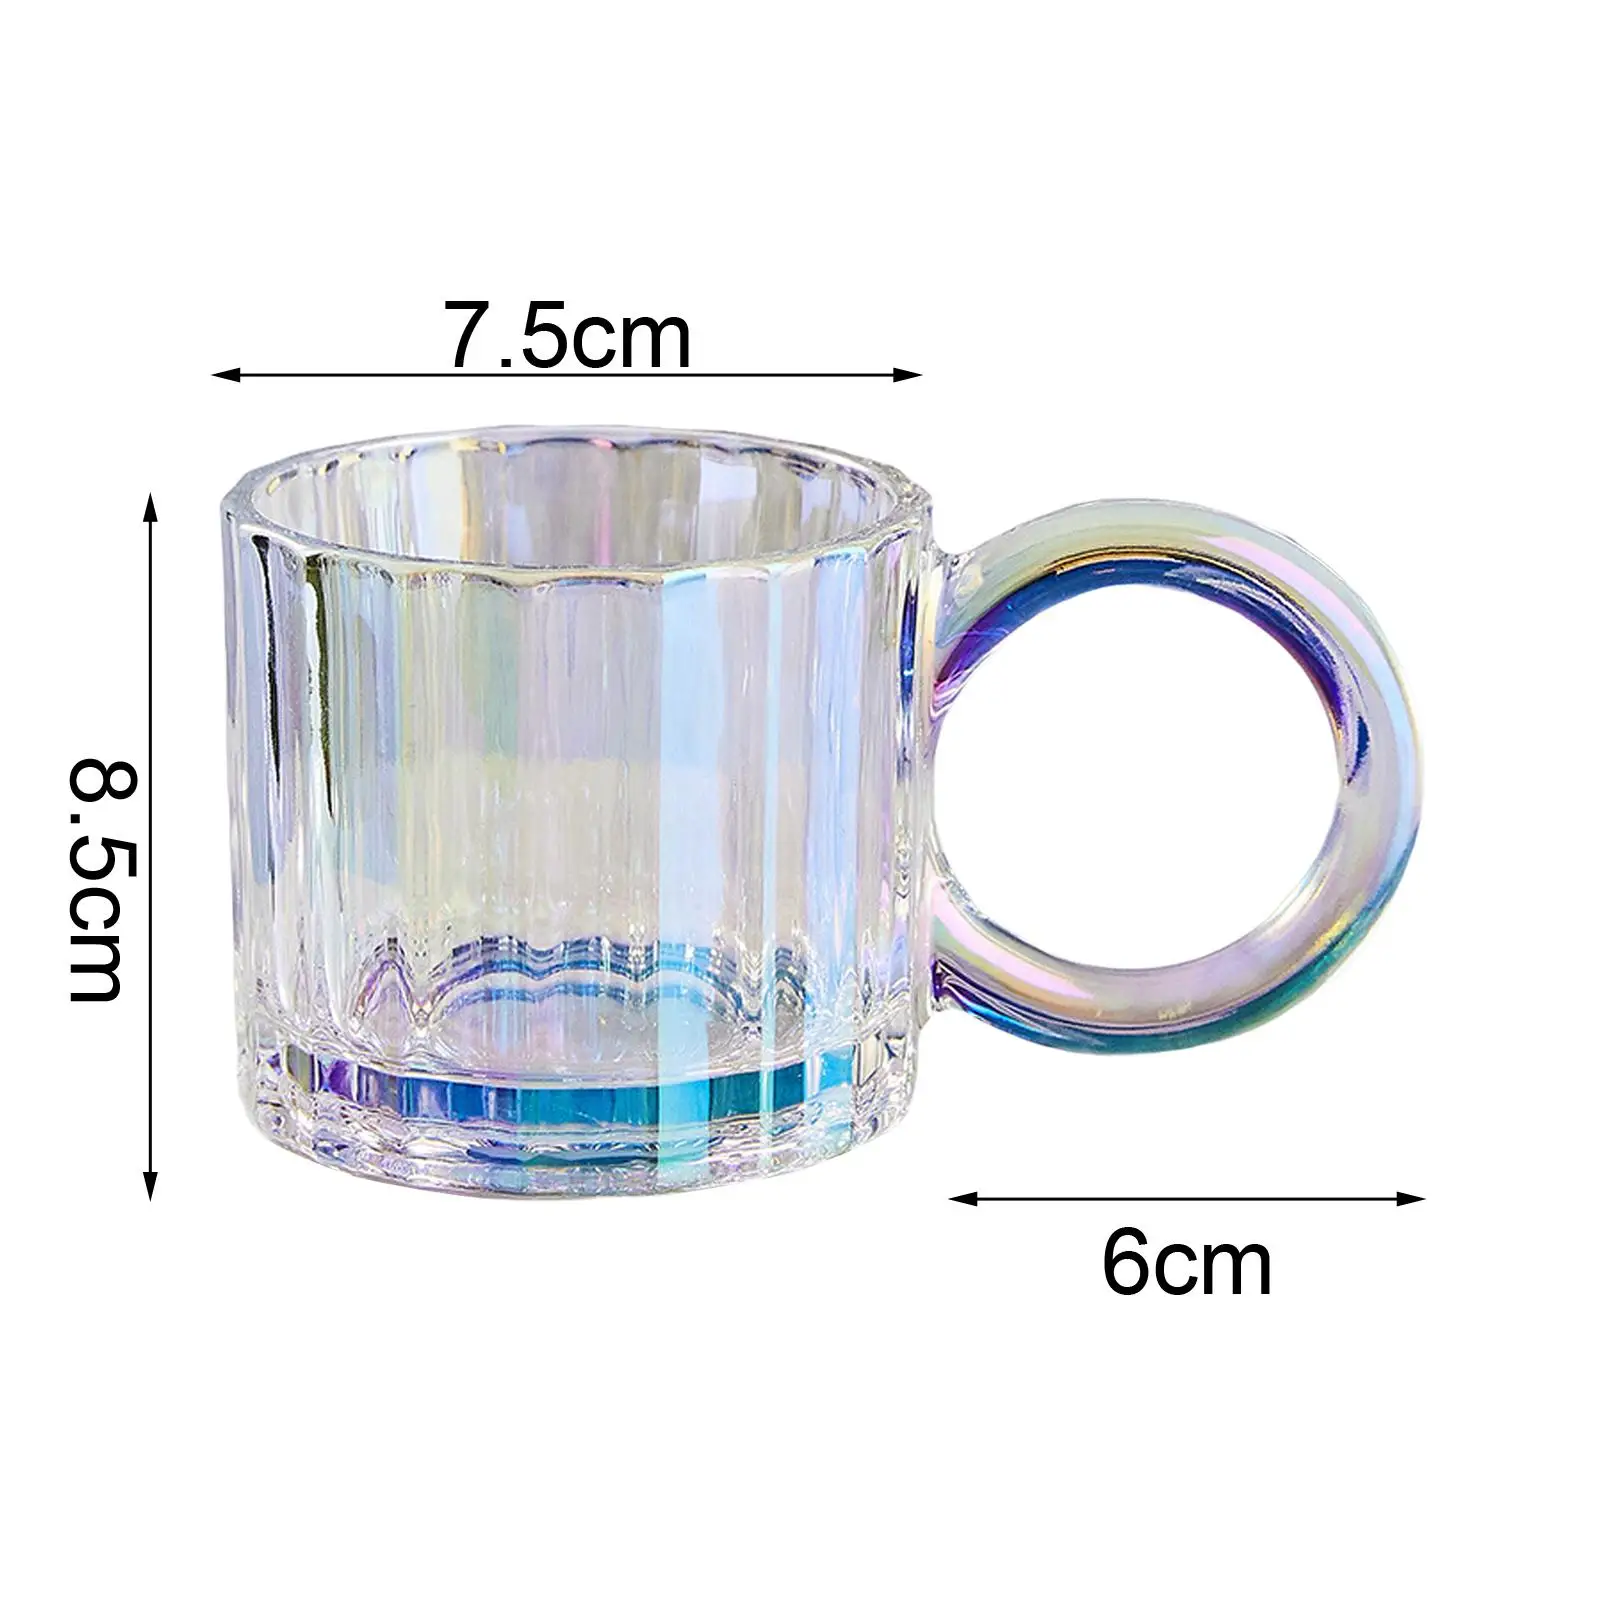 2x Coffee Mug 250ml Latte Mug Heat Resistant Drinkware for Home